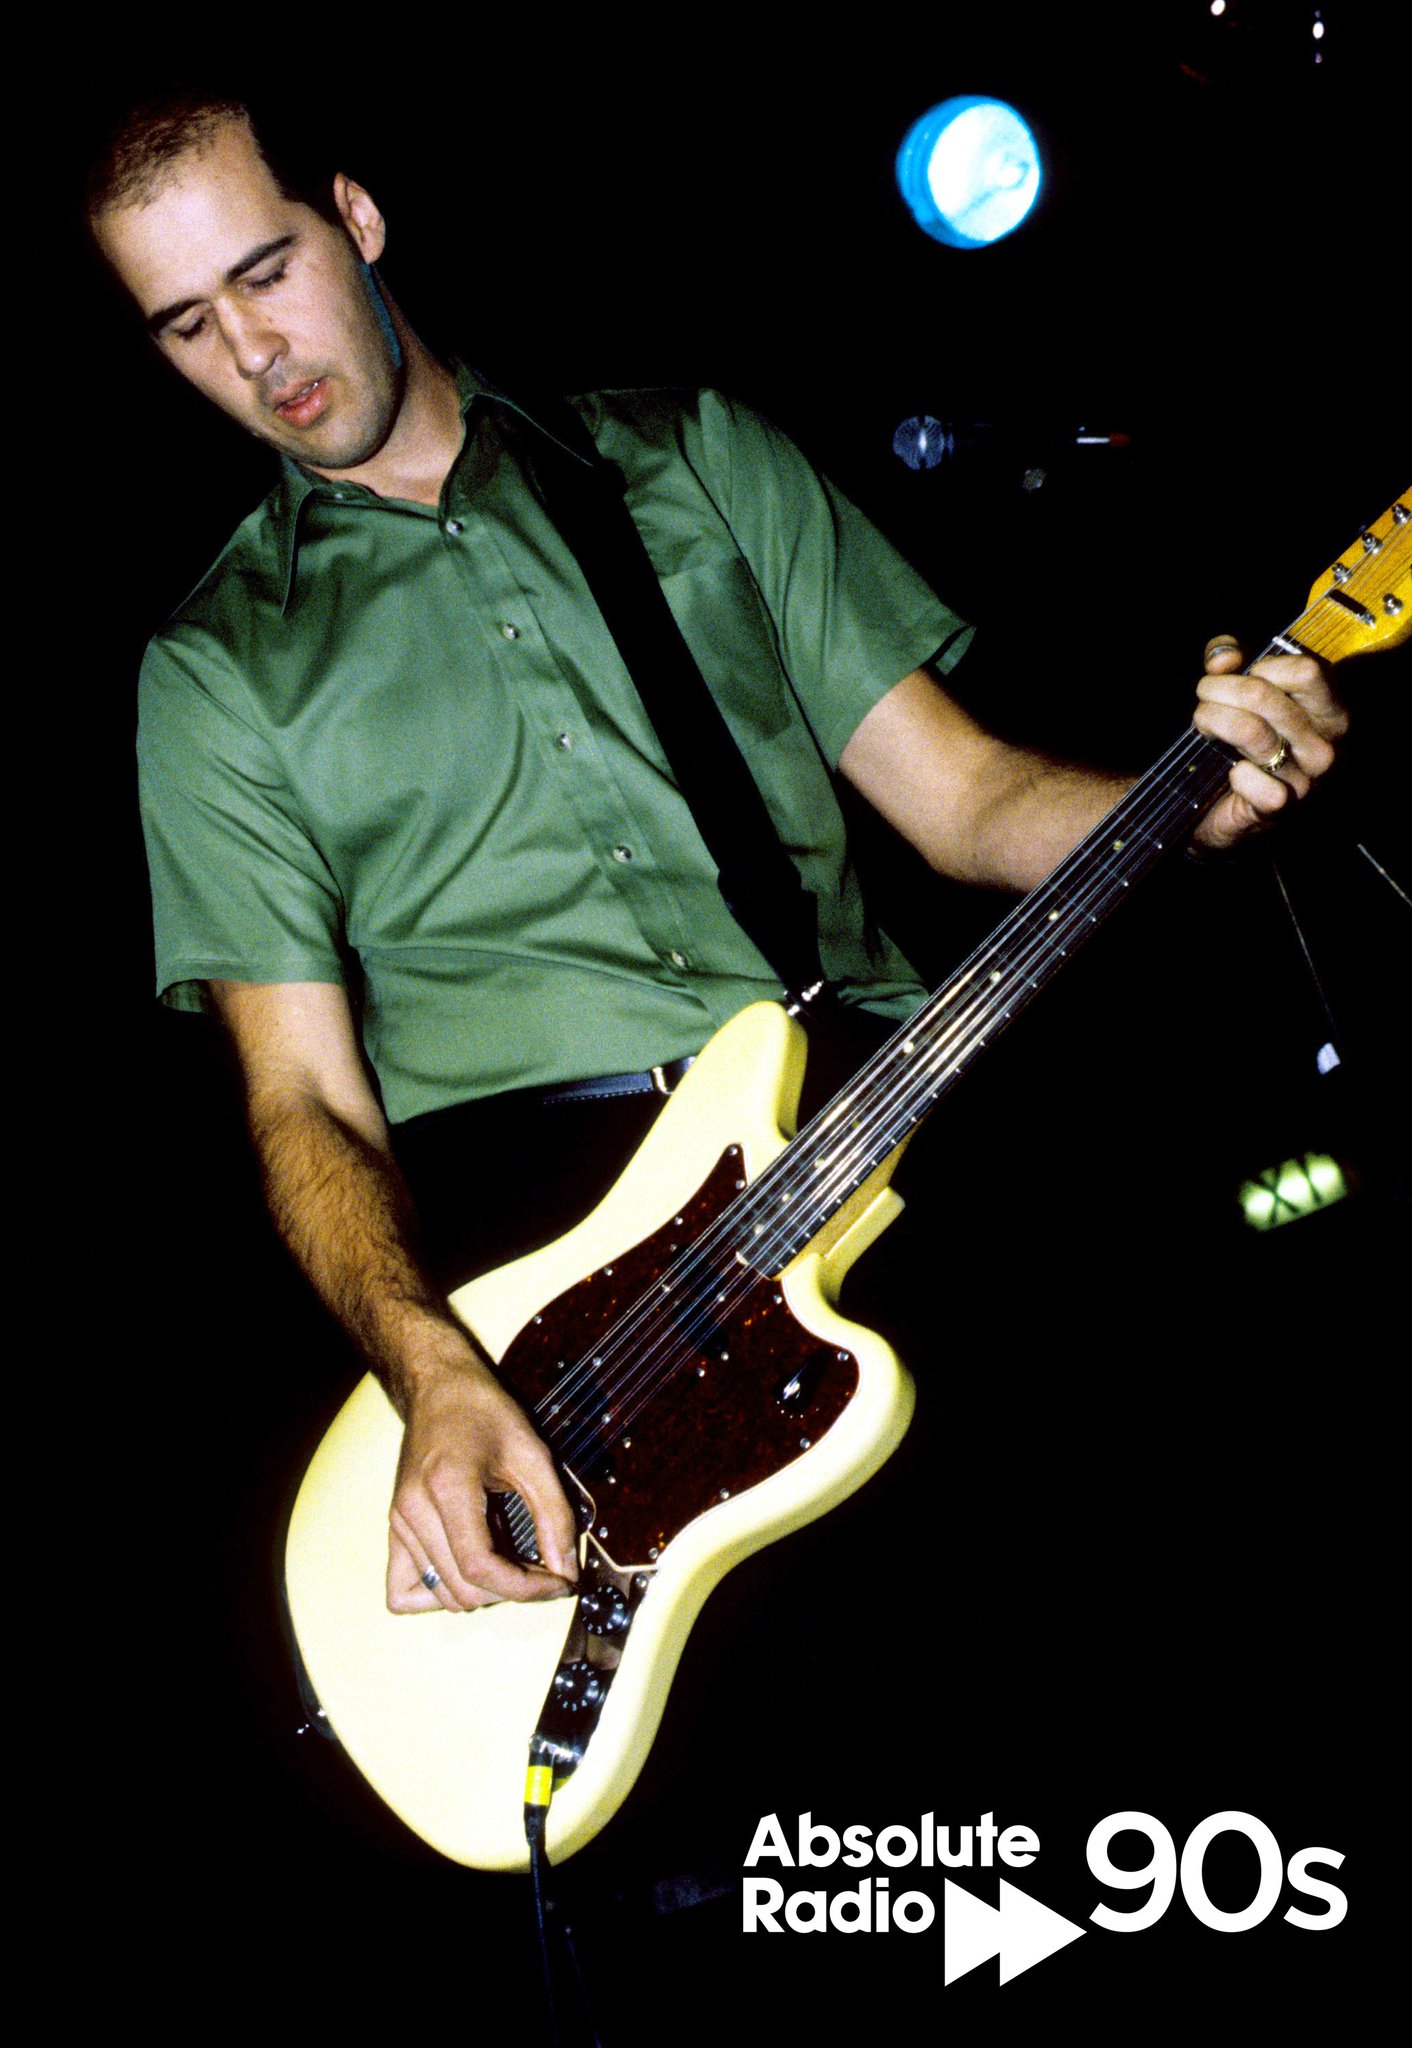 Wishing a Happy Birthday to Krist Novoselic, bass guitarist of Nirvana! 